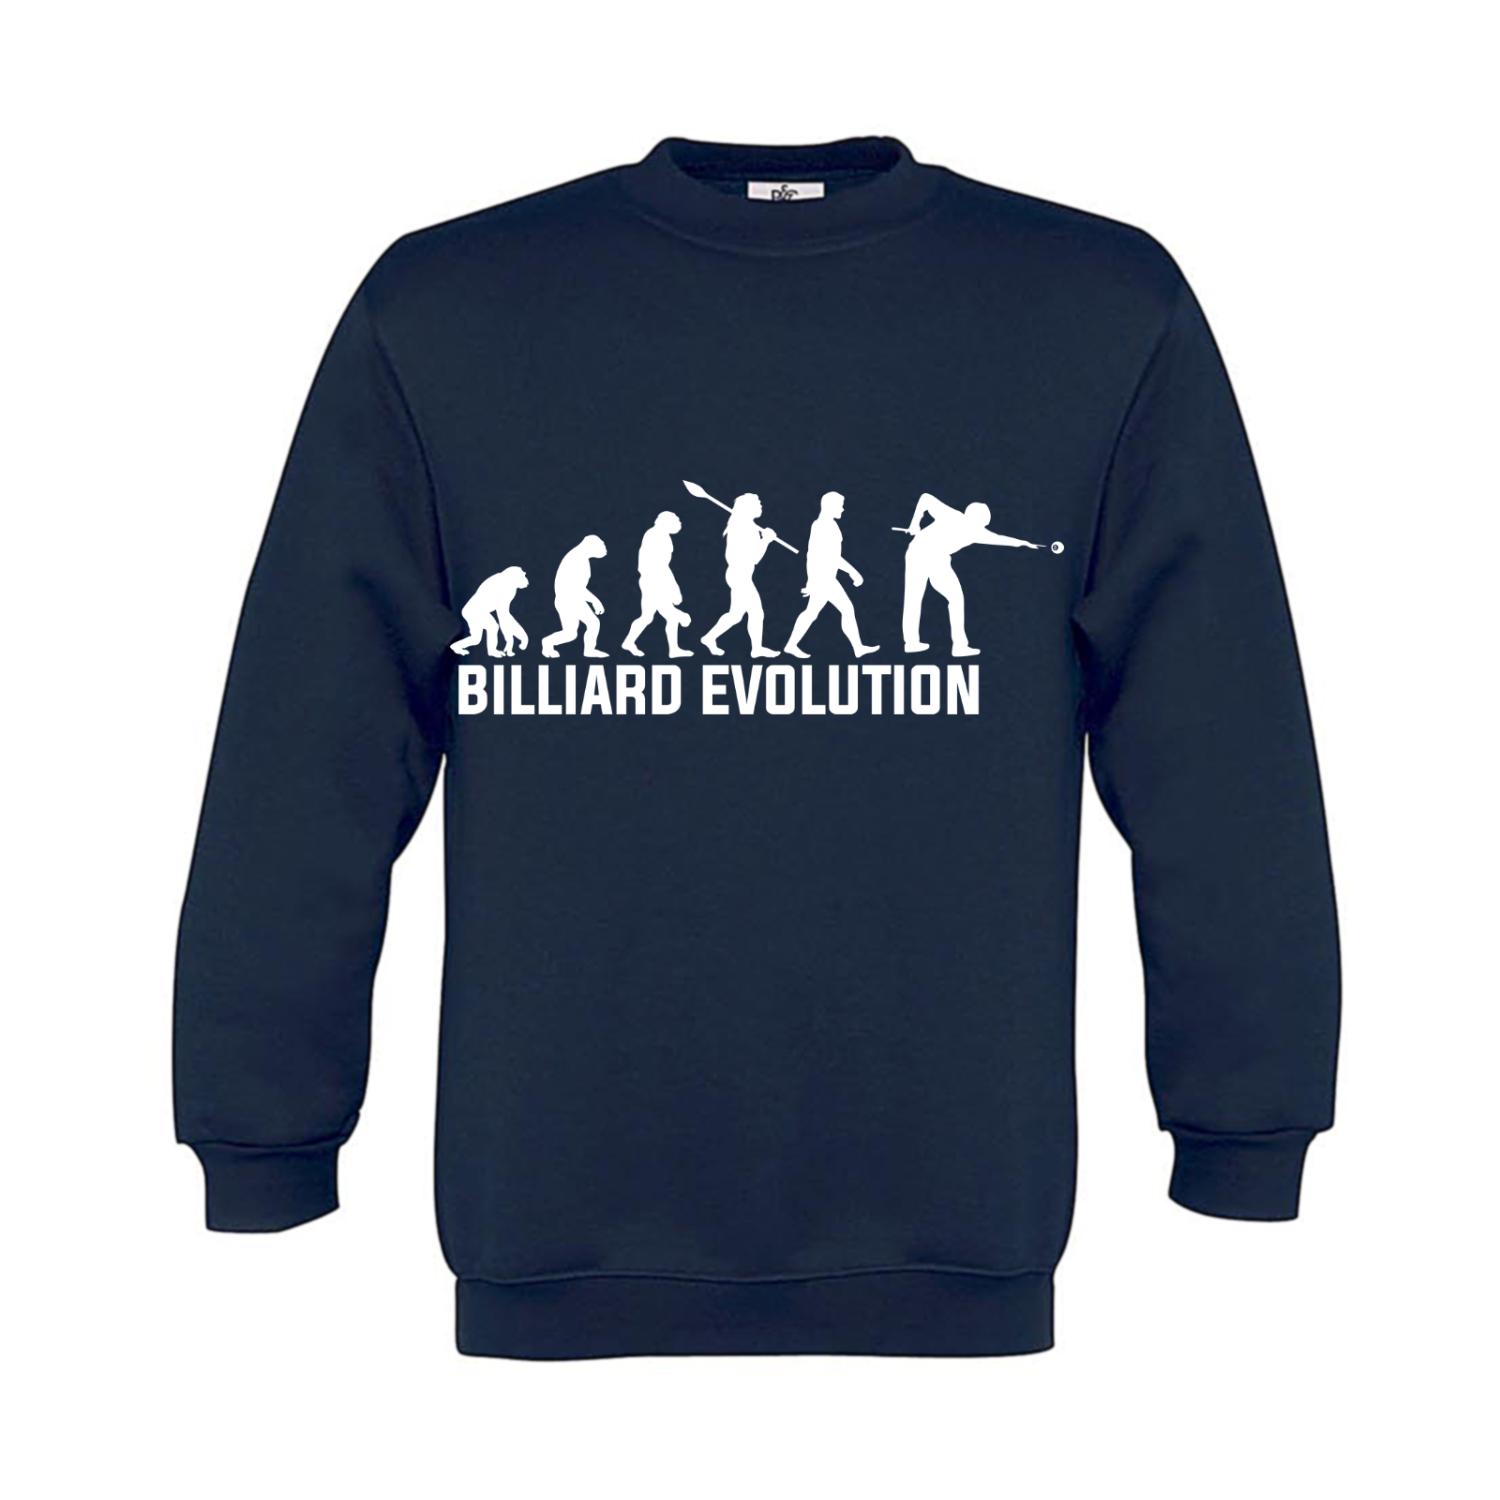 Sweatshirt Kinder Billard Evolution